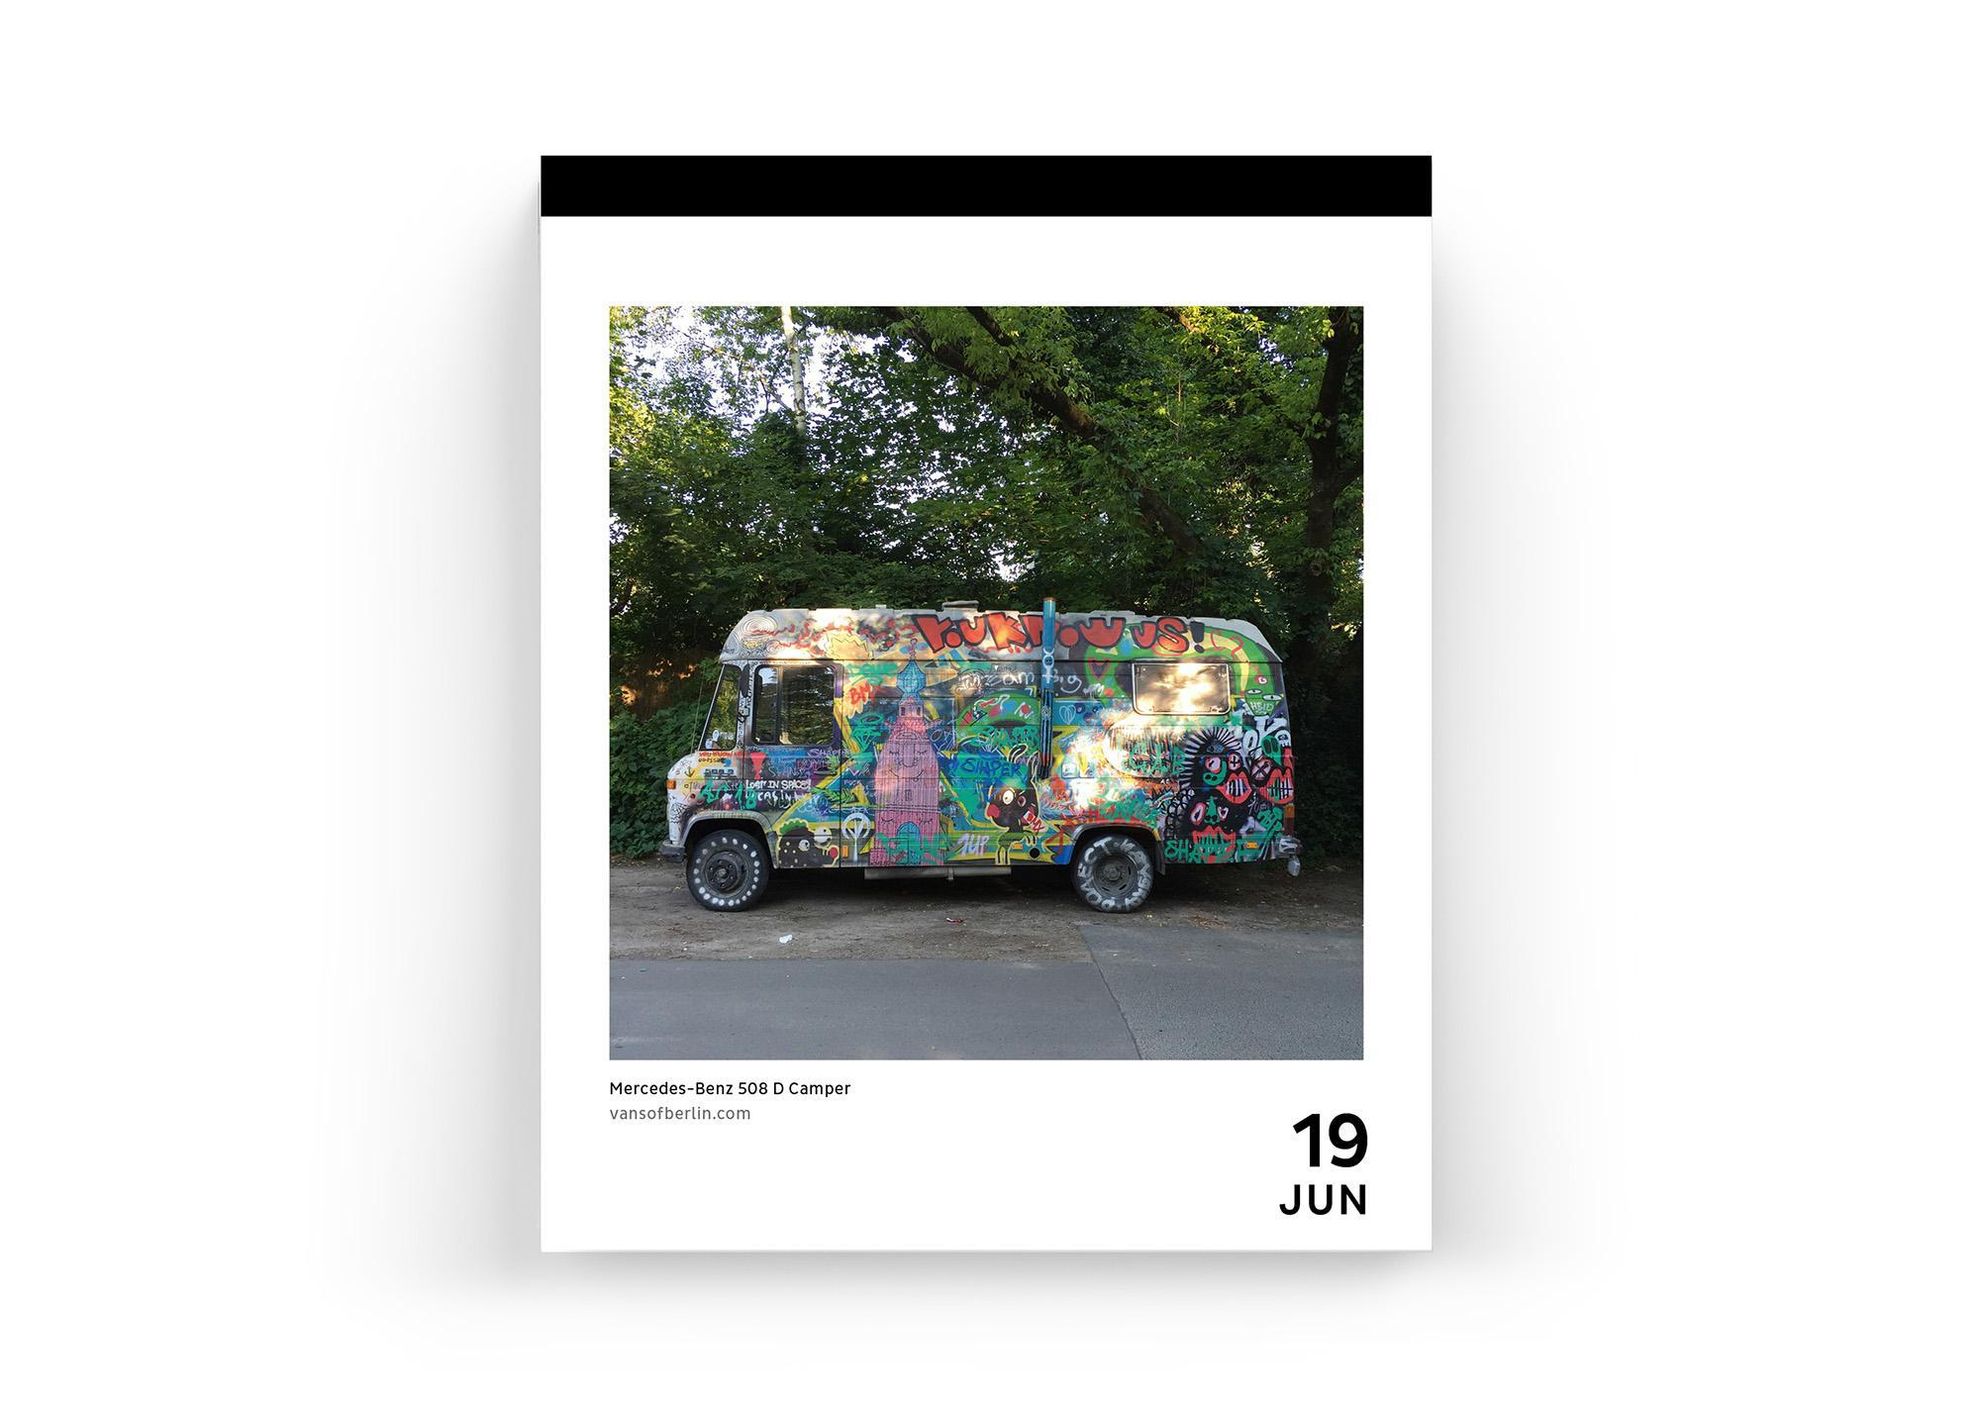 Vans of Berlin - Kalender jetzt günstig bei Weltbild.de bestellen